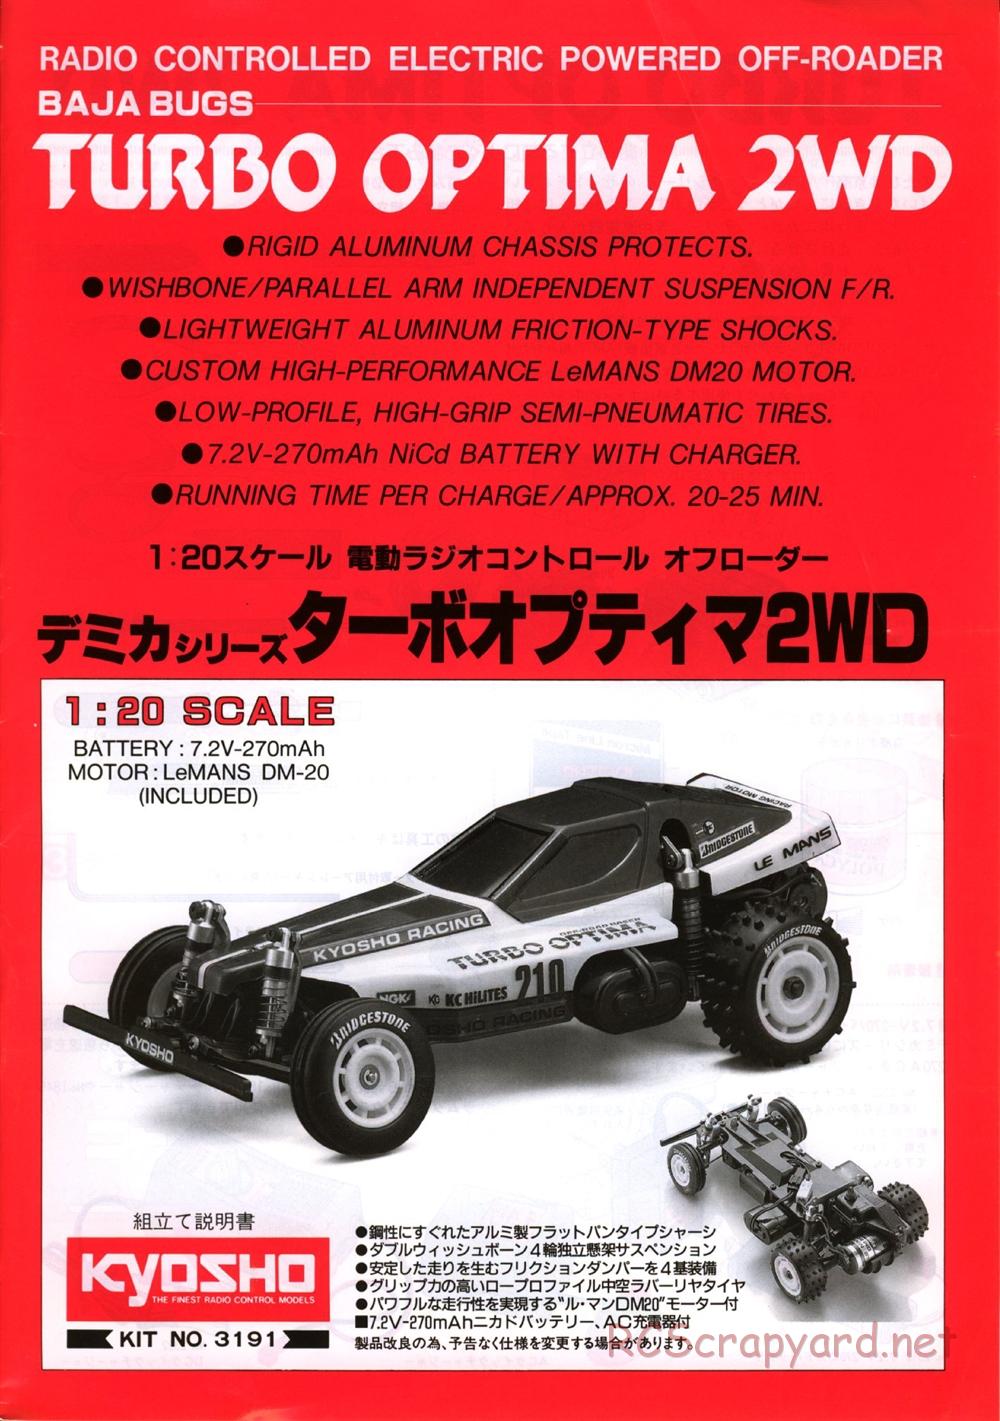 Kyosho - Baja Bugs - Turbo Optima 2WD - Manual - Page 1